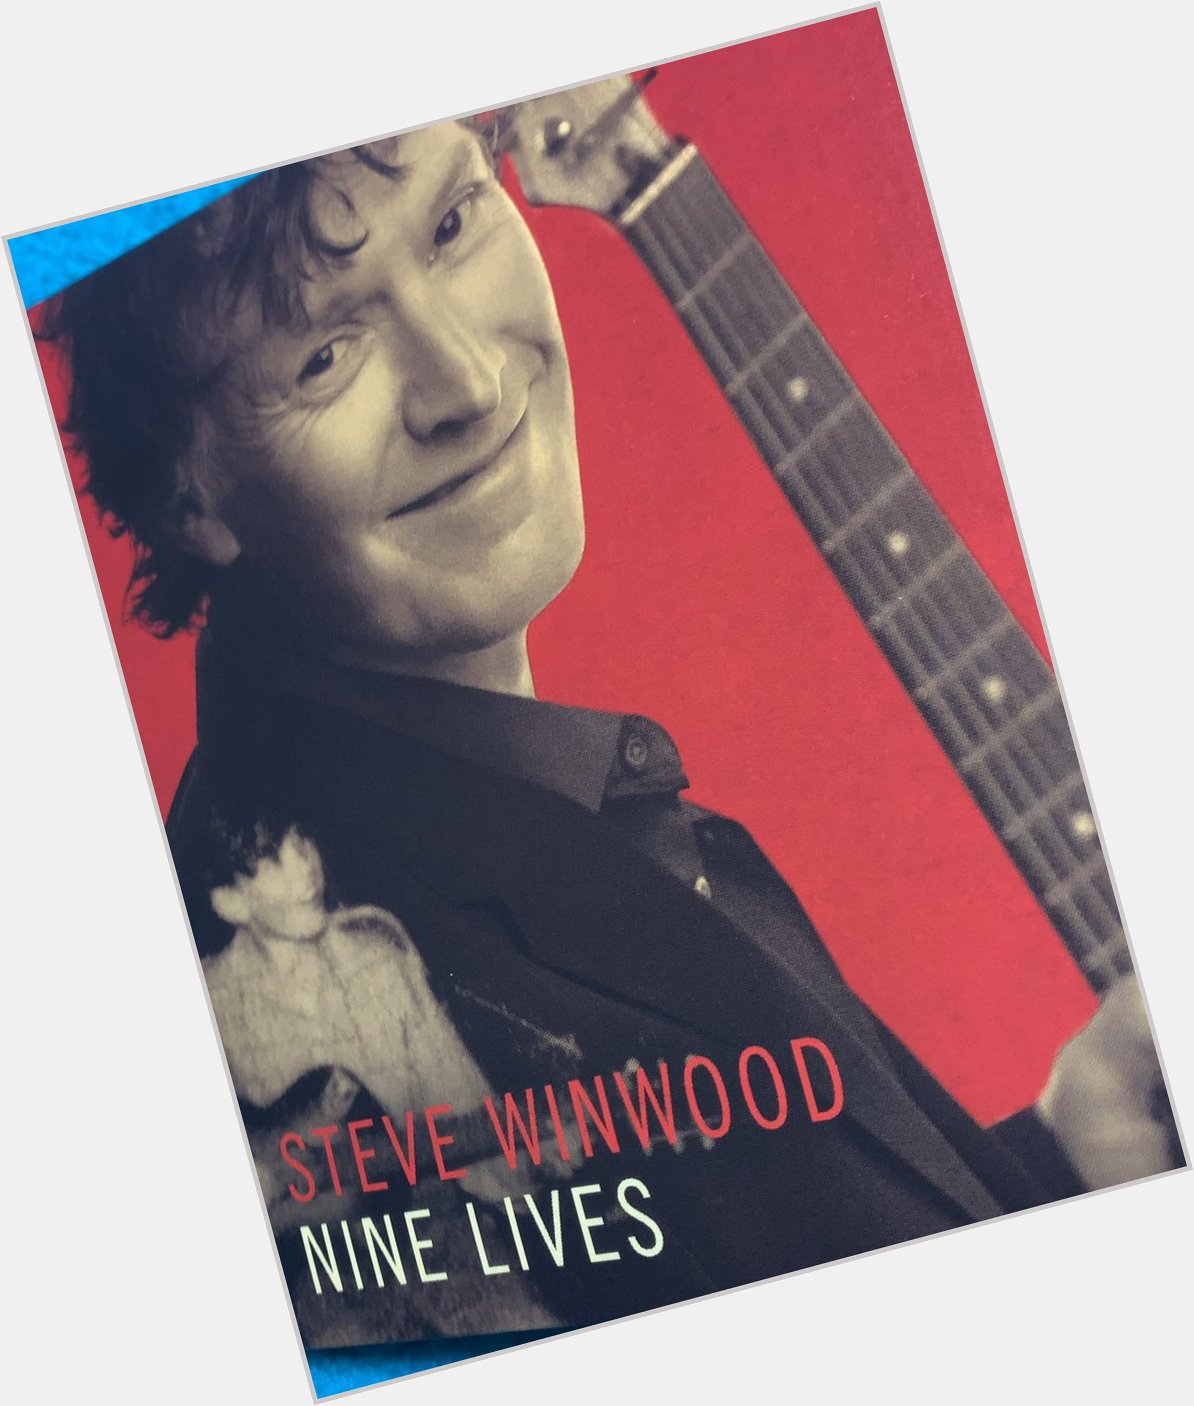         STEVE WINWOOD NINE LIVES  DIRTY CITY Happy birthday 
Steve Winwood 1948 5 12 73           